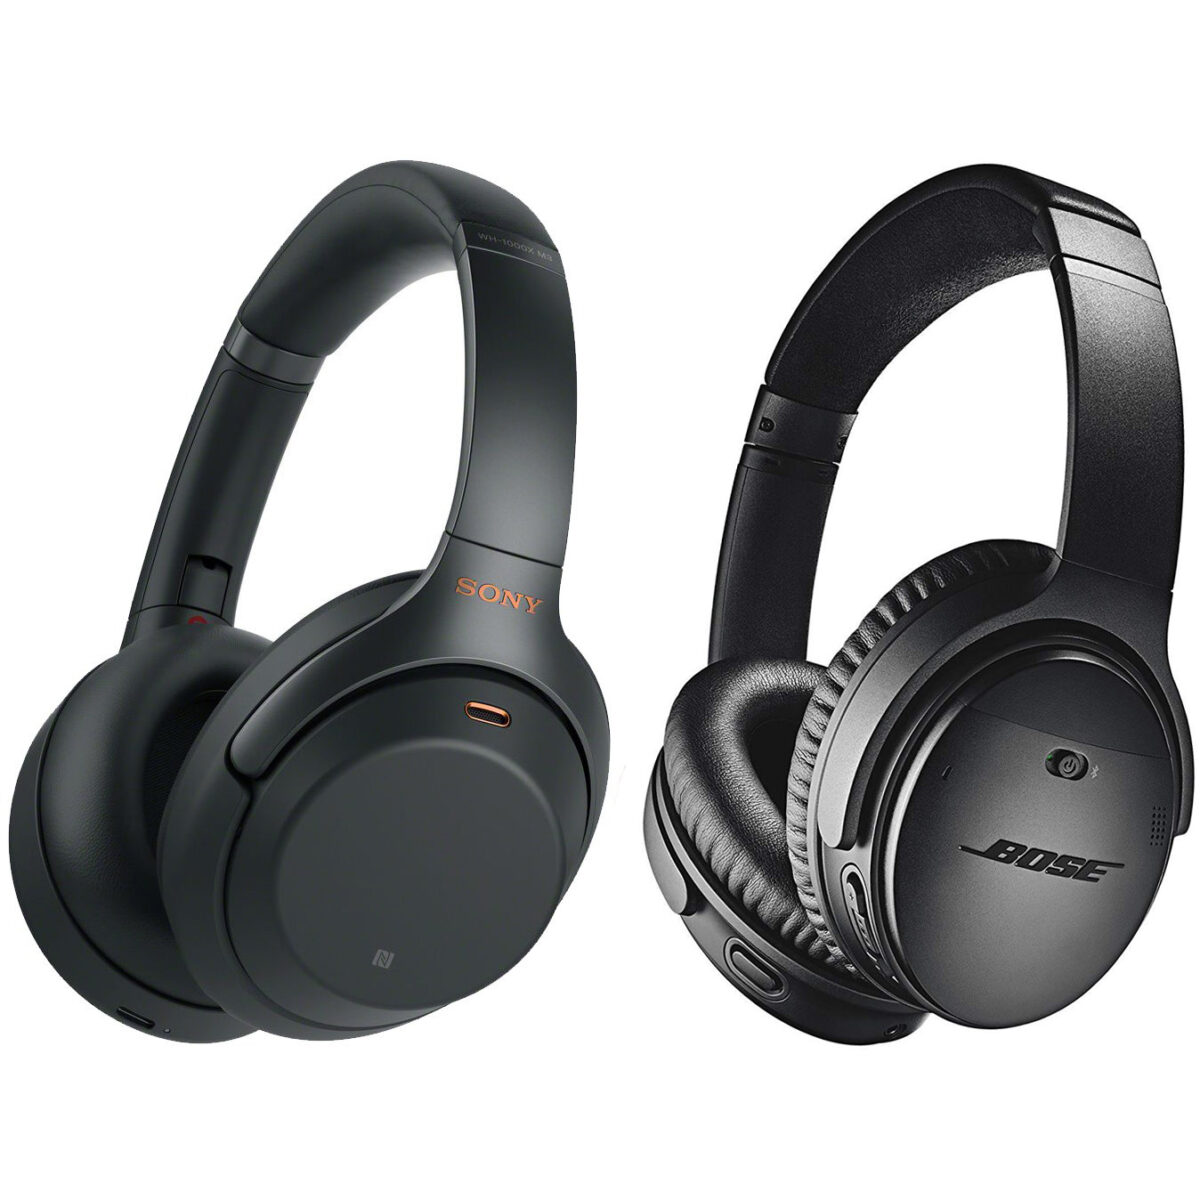 Silence is Golden: Bose QuietComfort 35 II vs. Sony WH-1000XM3 Headphones –  Techgage